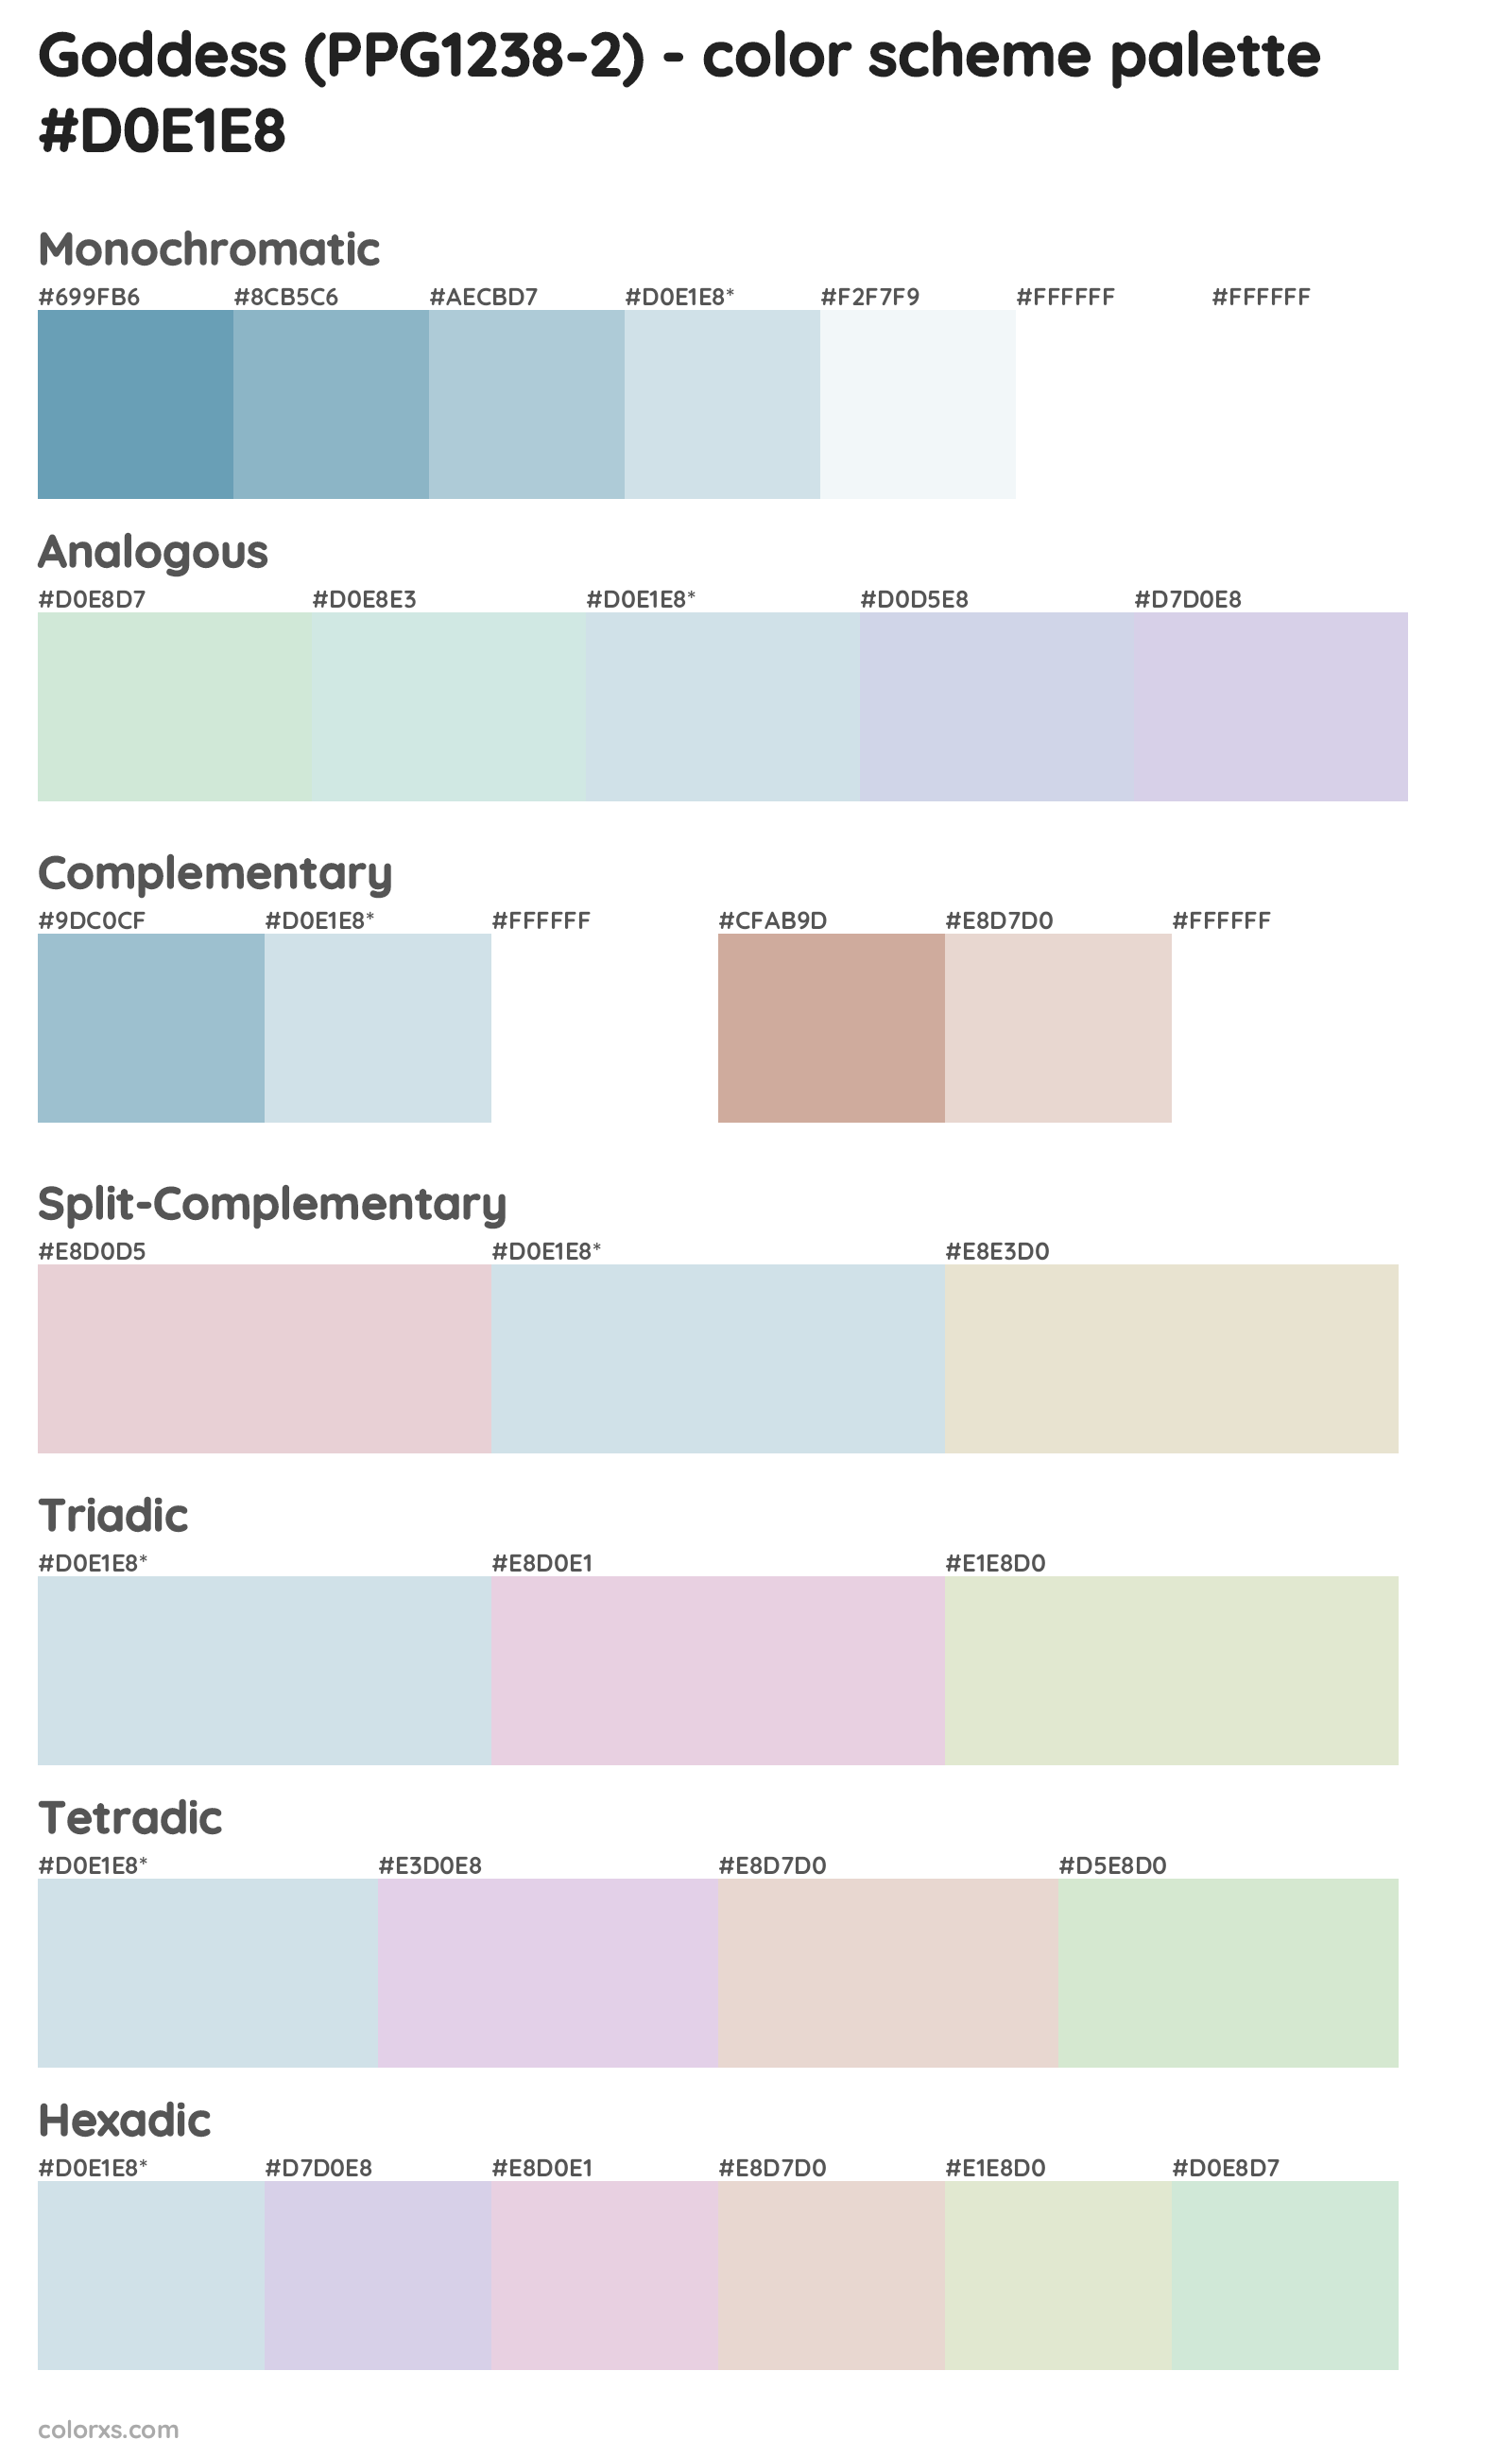 Goddess (PPG1238-2) Color Scheme Palettes